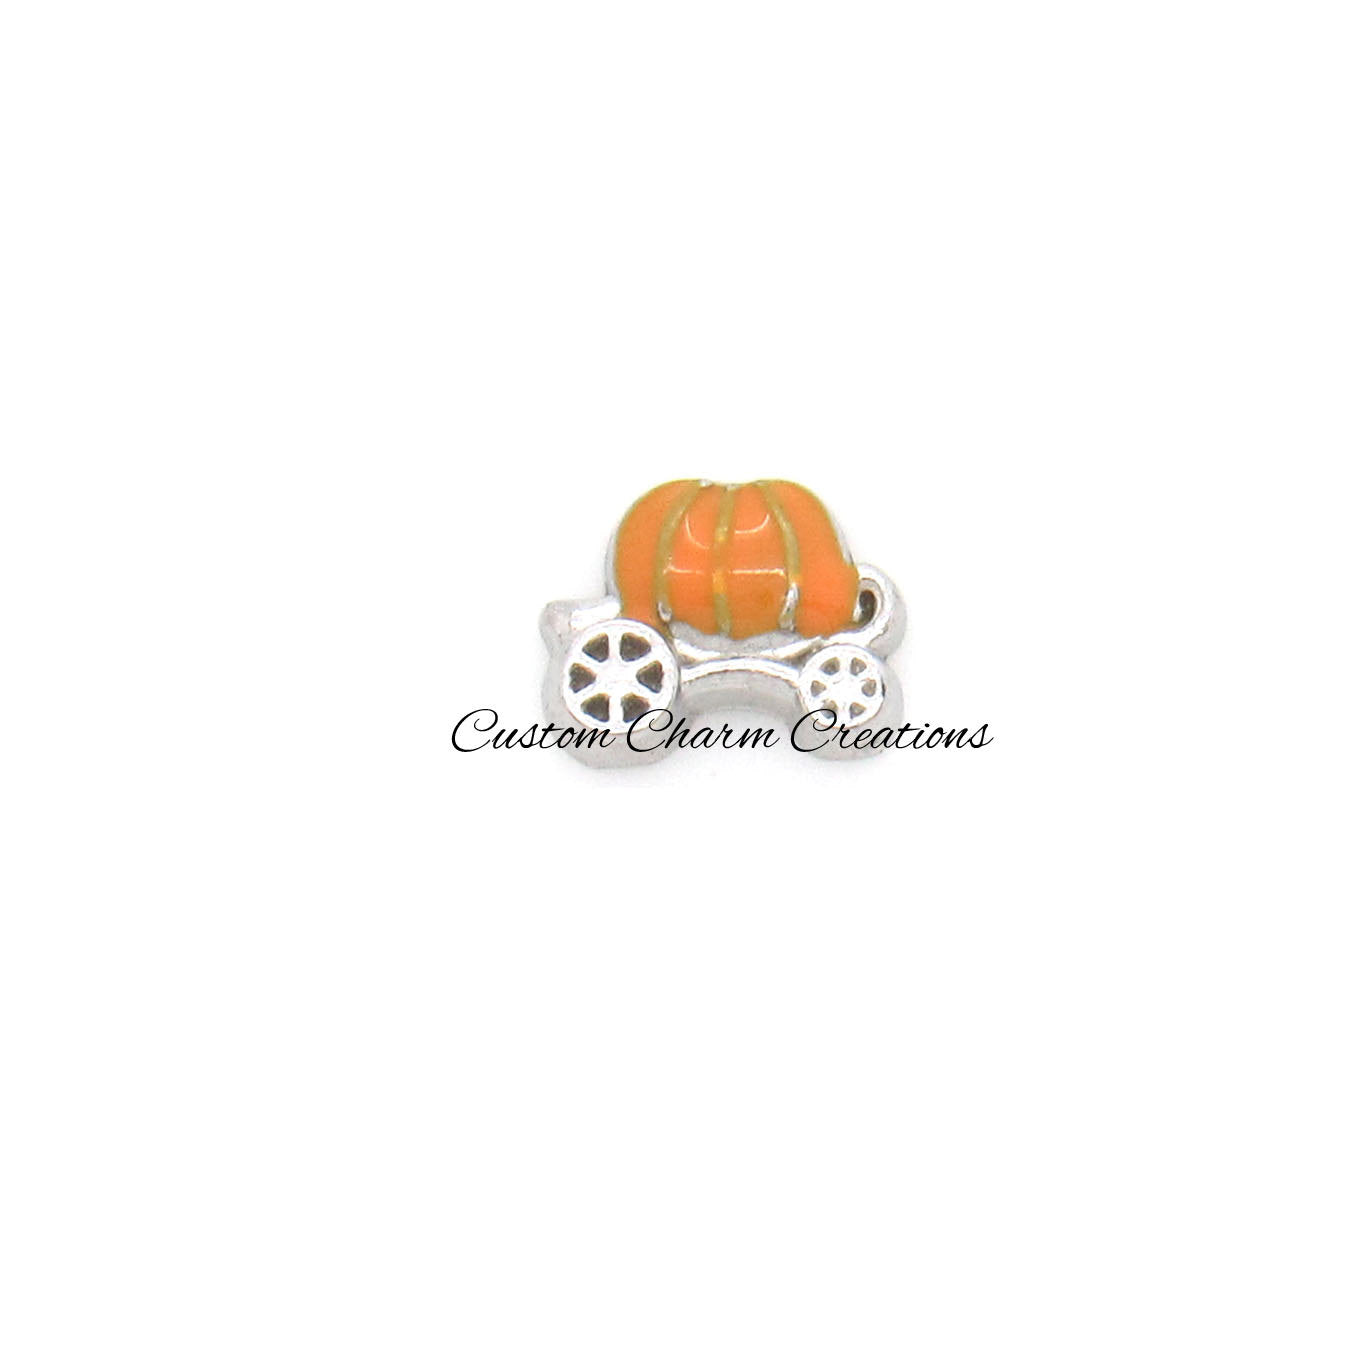 Pumpkin Carriage Floating Locket Charm - Custom Charm Creations